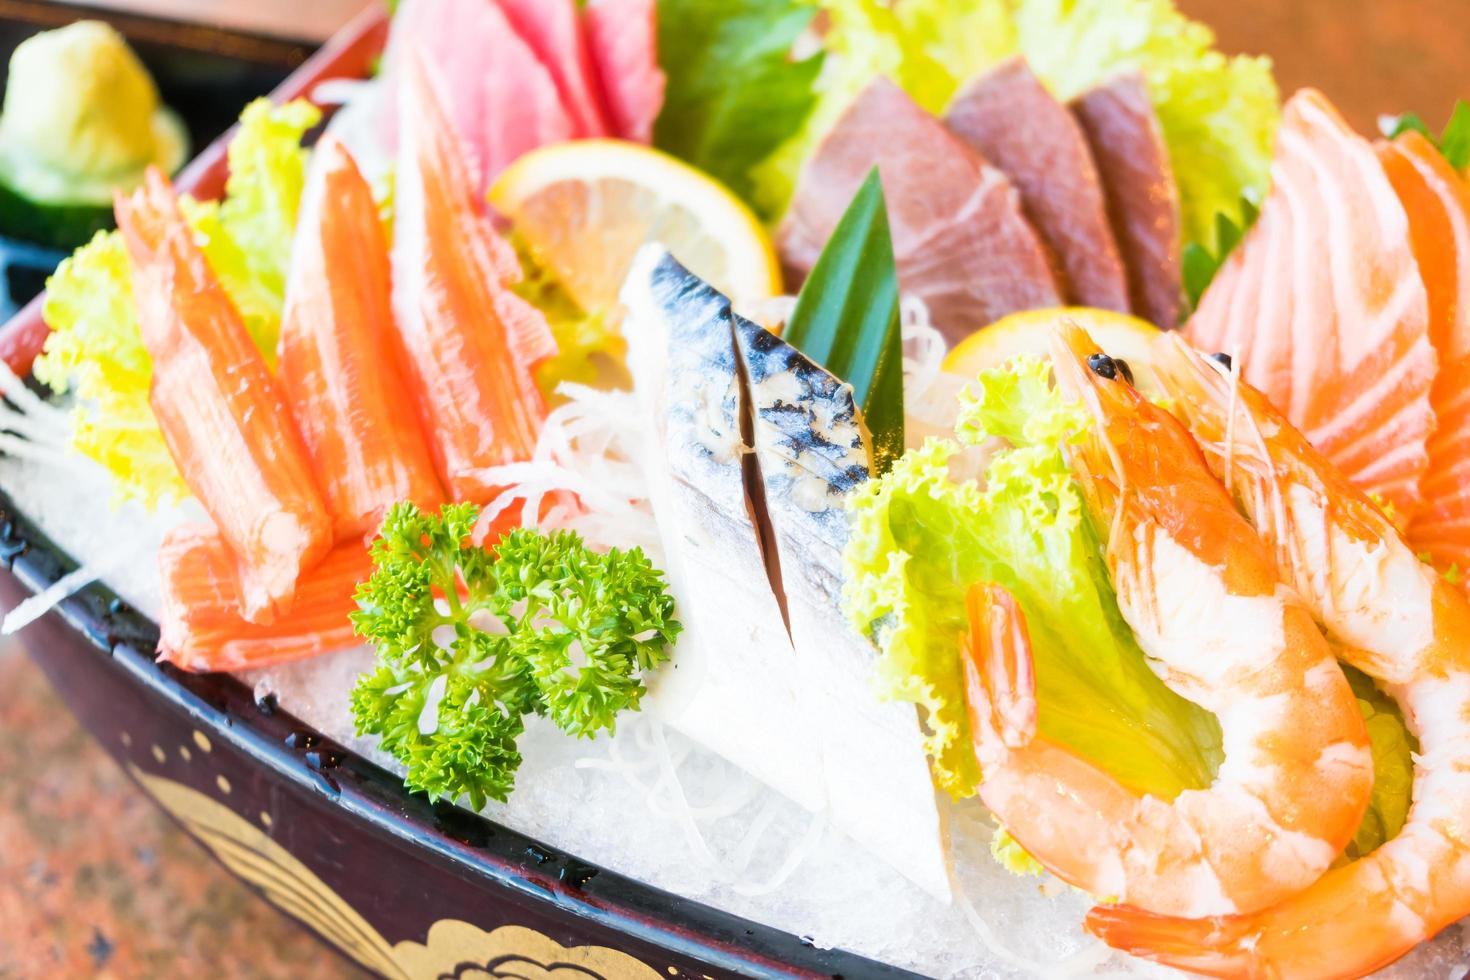 sushi e sashimi foto